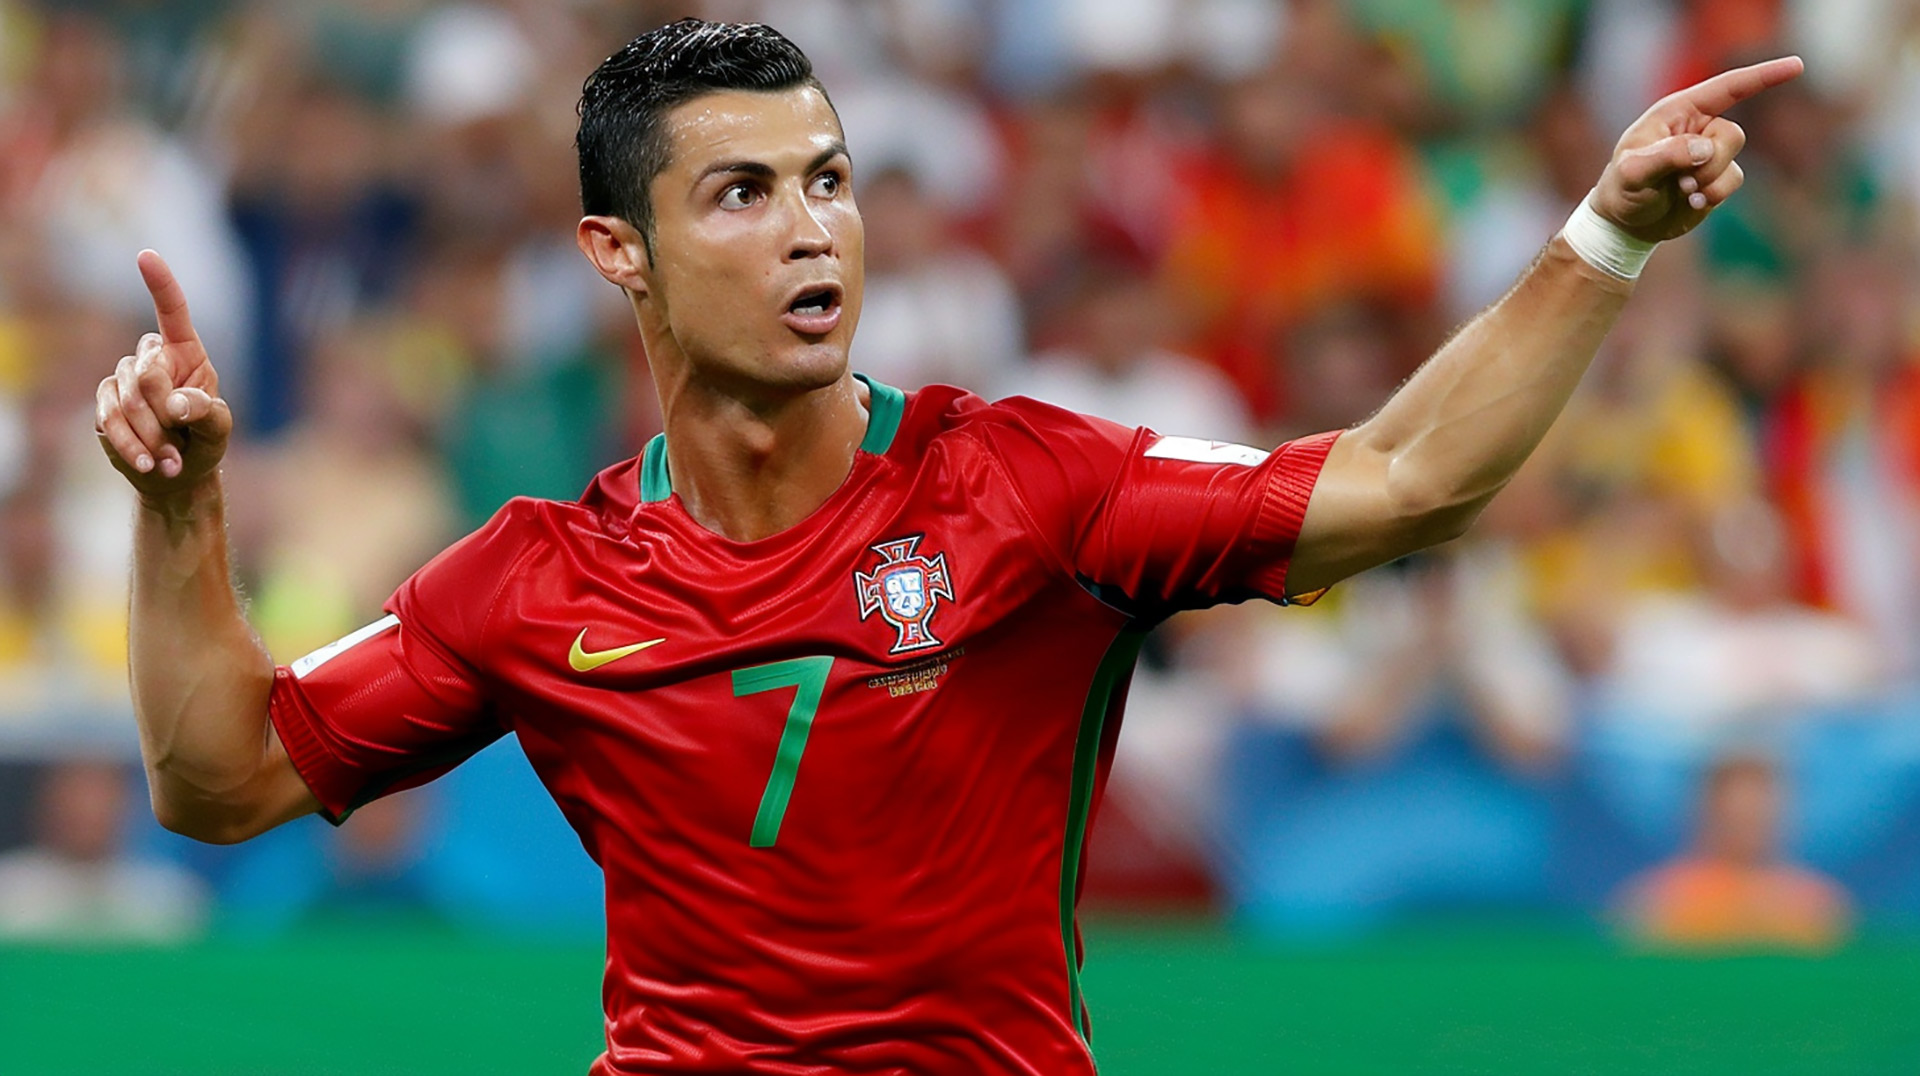 Ronaldo HD Wallpaper: 16:9 Aspect Ratio